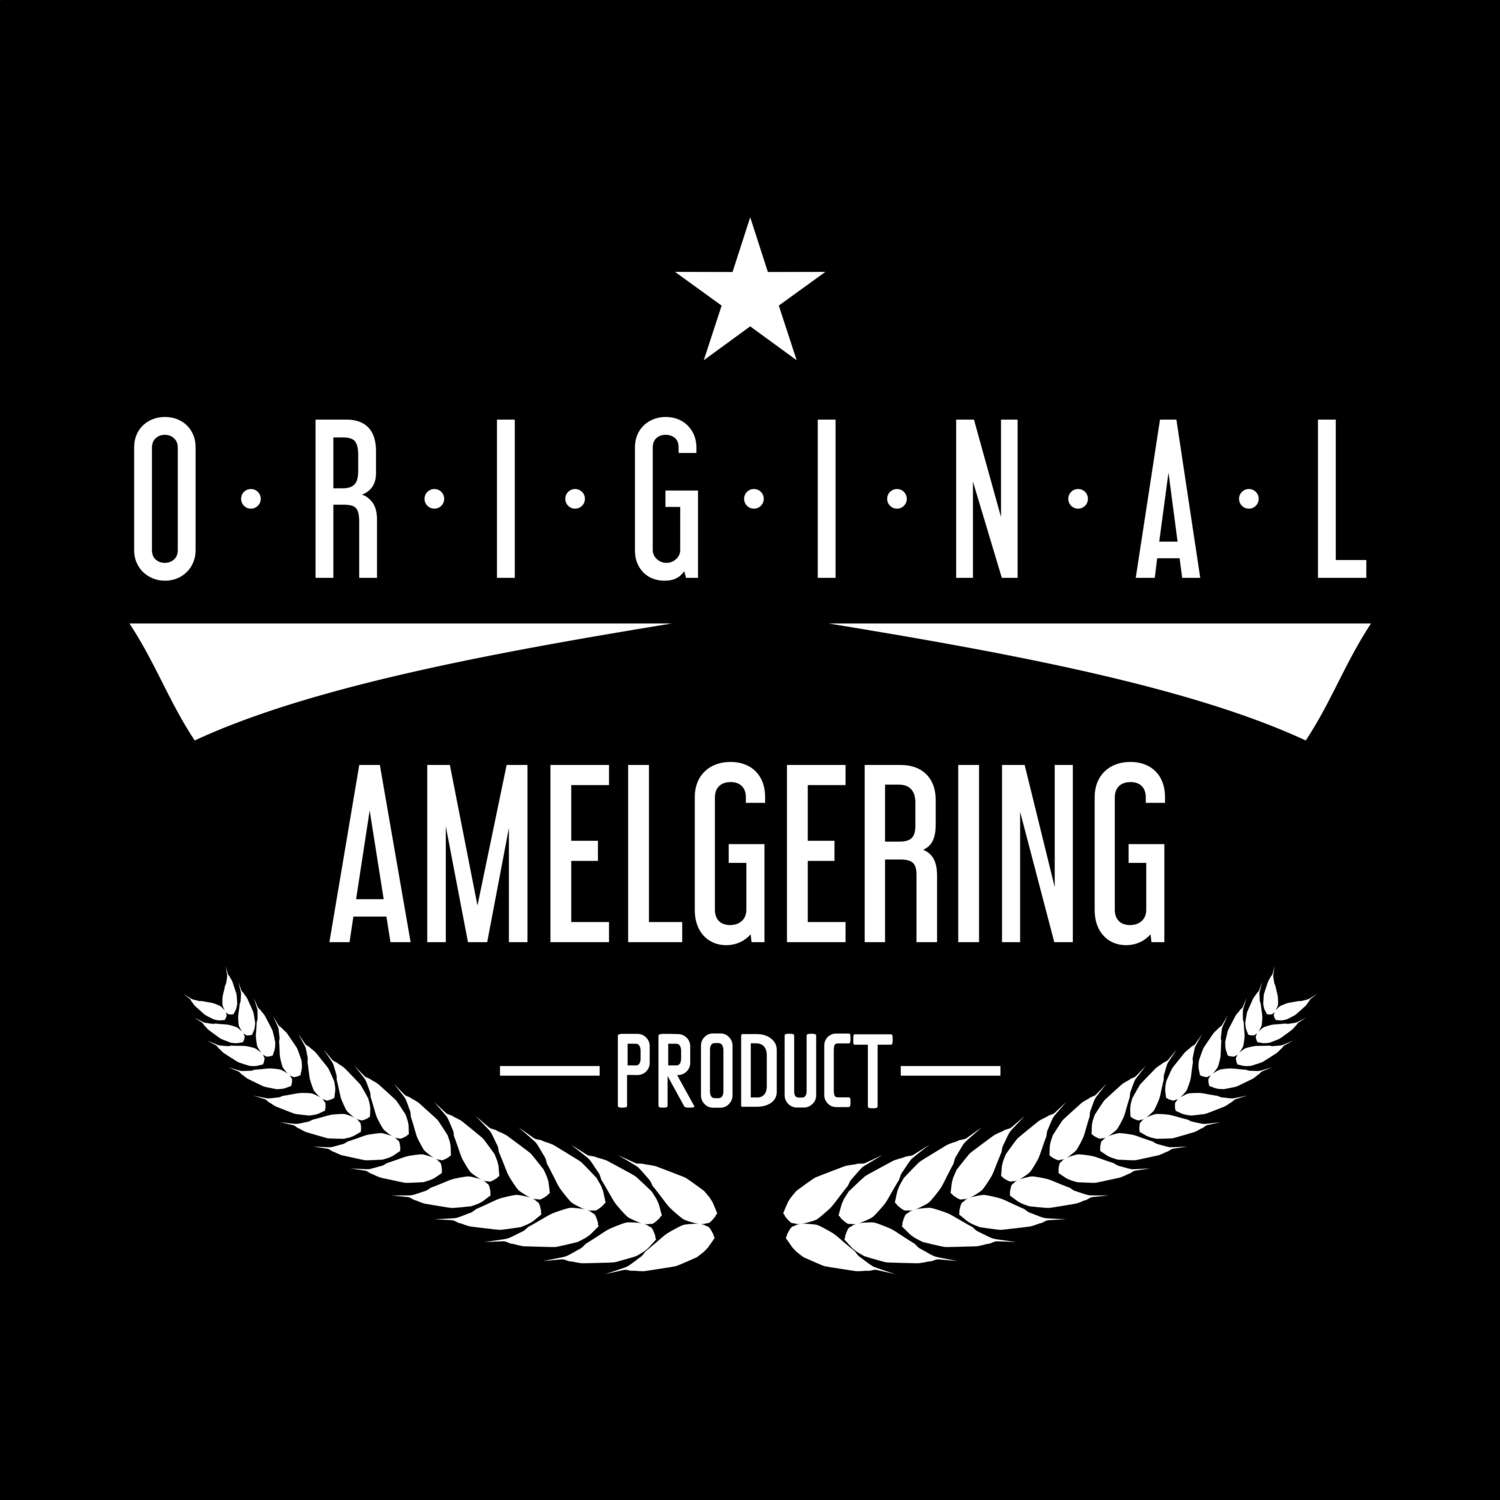 Amelgering T-Shirt »Original Product«